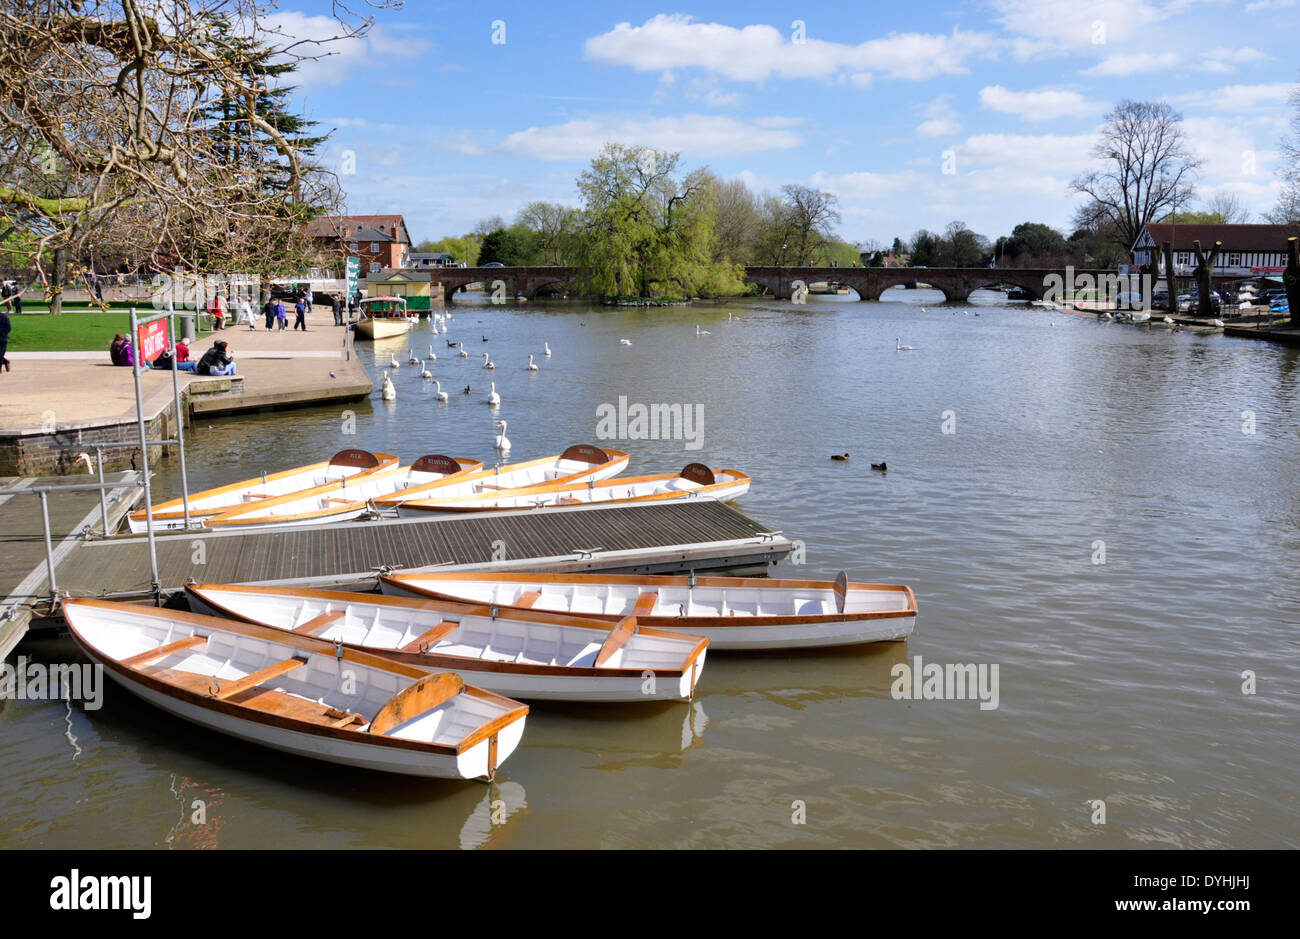 Stratford upon Avon - river Avon - view to Clopton Bridge - hire rowing boats - swans - people walking  - spring sunshine Stock Photo